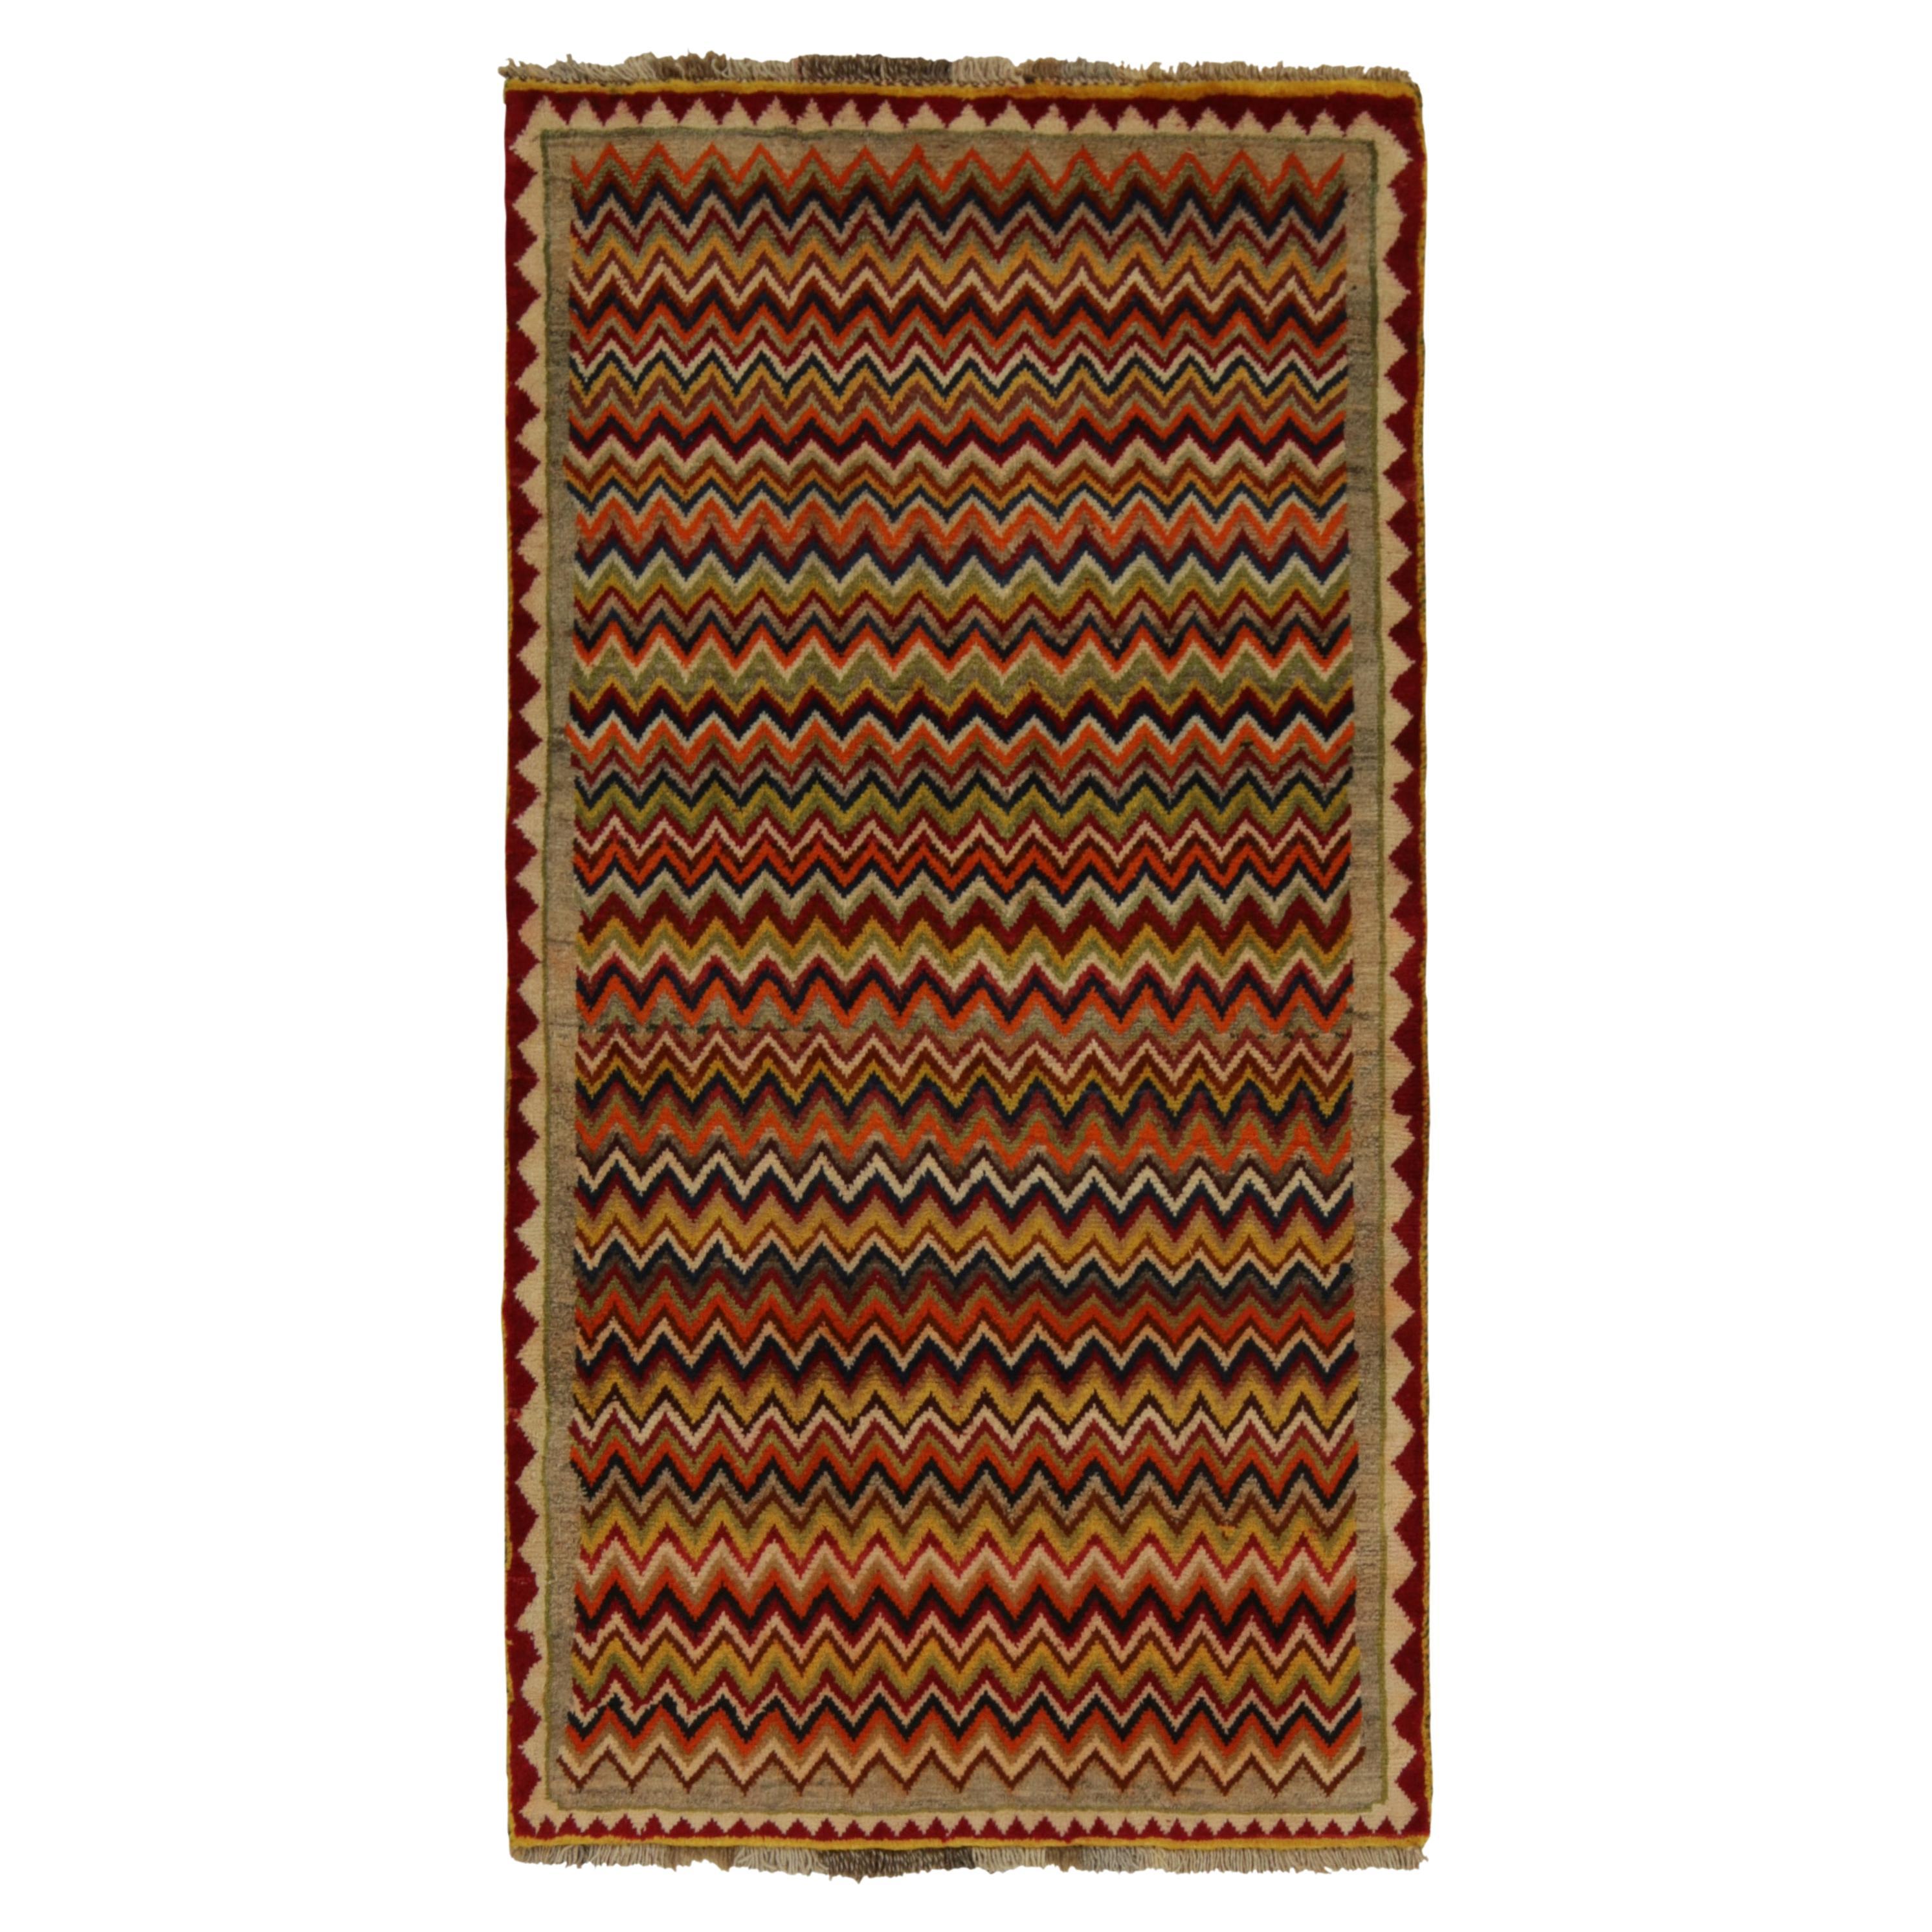 Vintage Gabbeh Persian Tribal Rug in Vibrant Chevron Patterns by Rug & Kilim